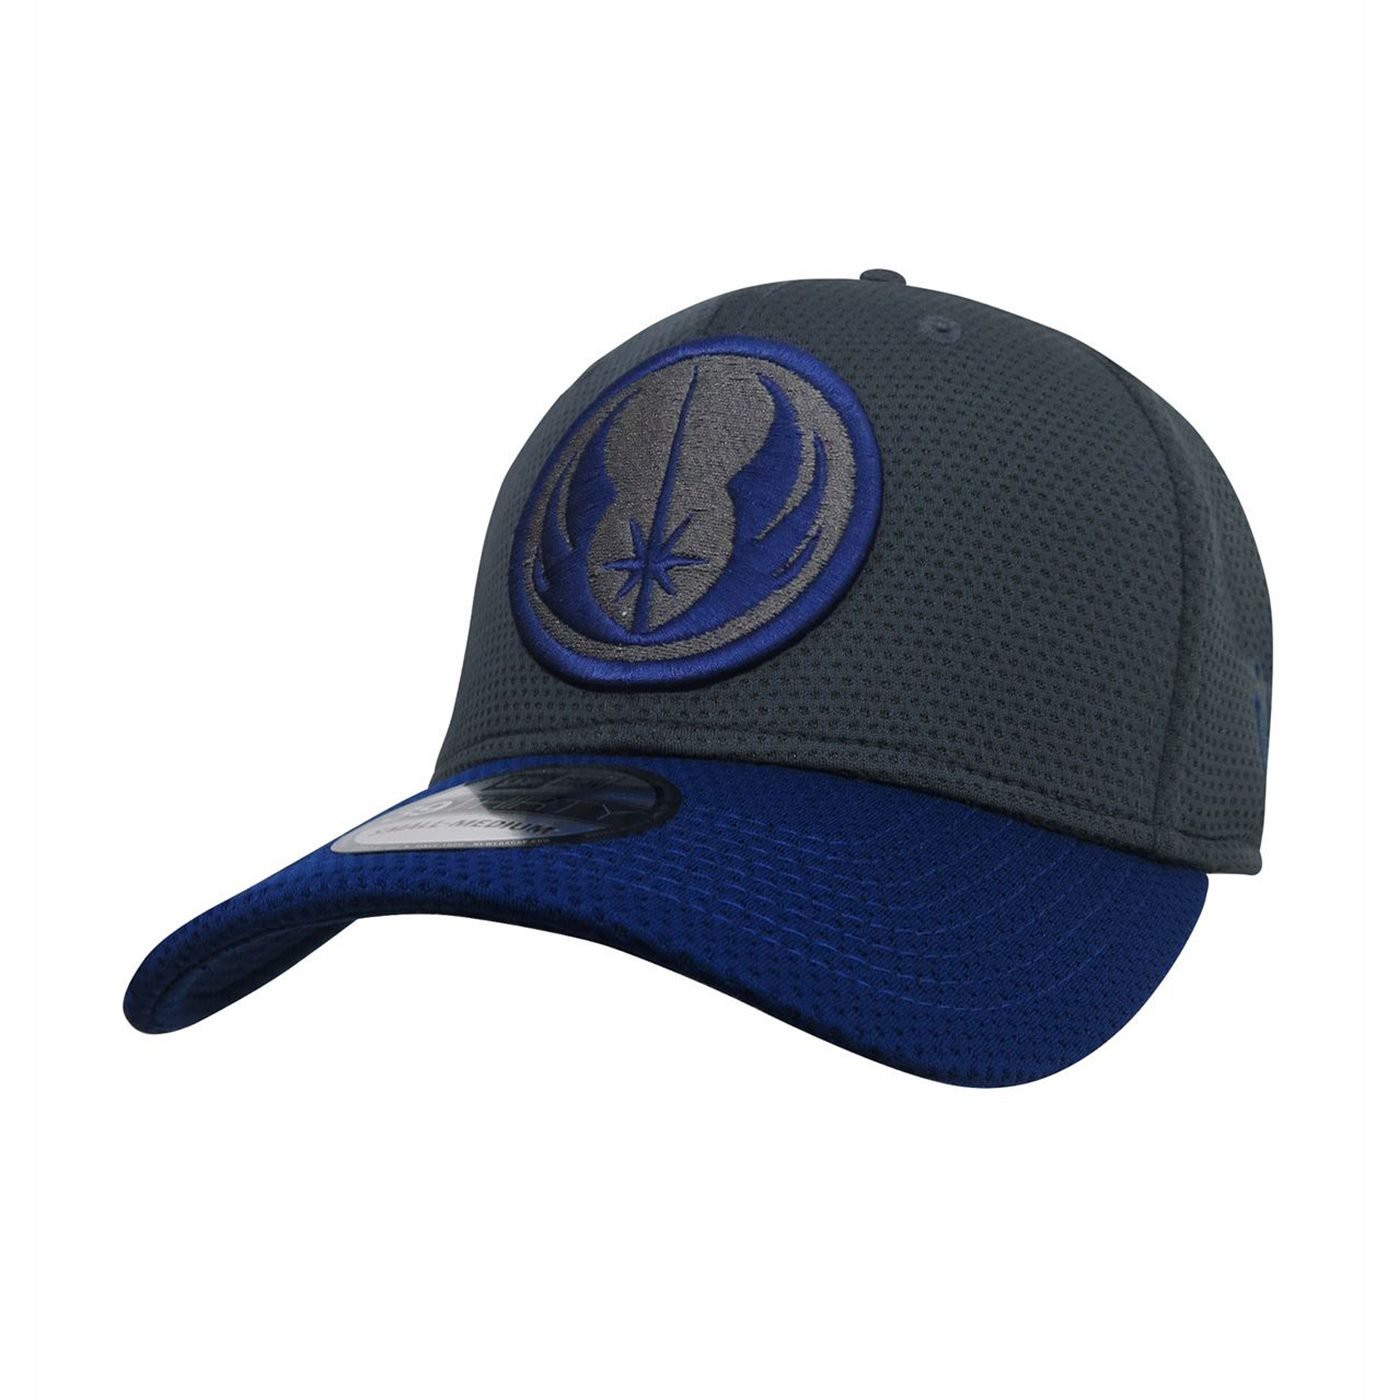 Star Wars Jedi Order Symbol New Era 39Thirty Fitted Hat